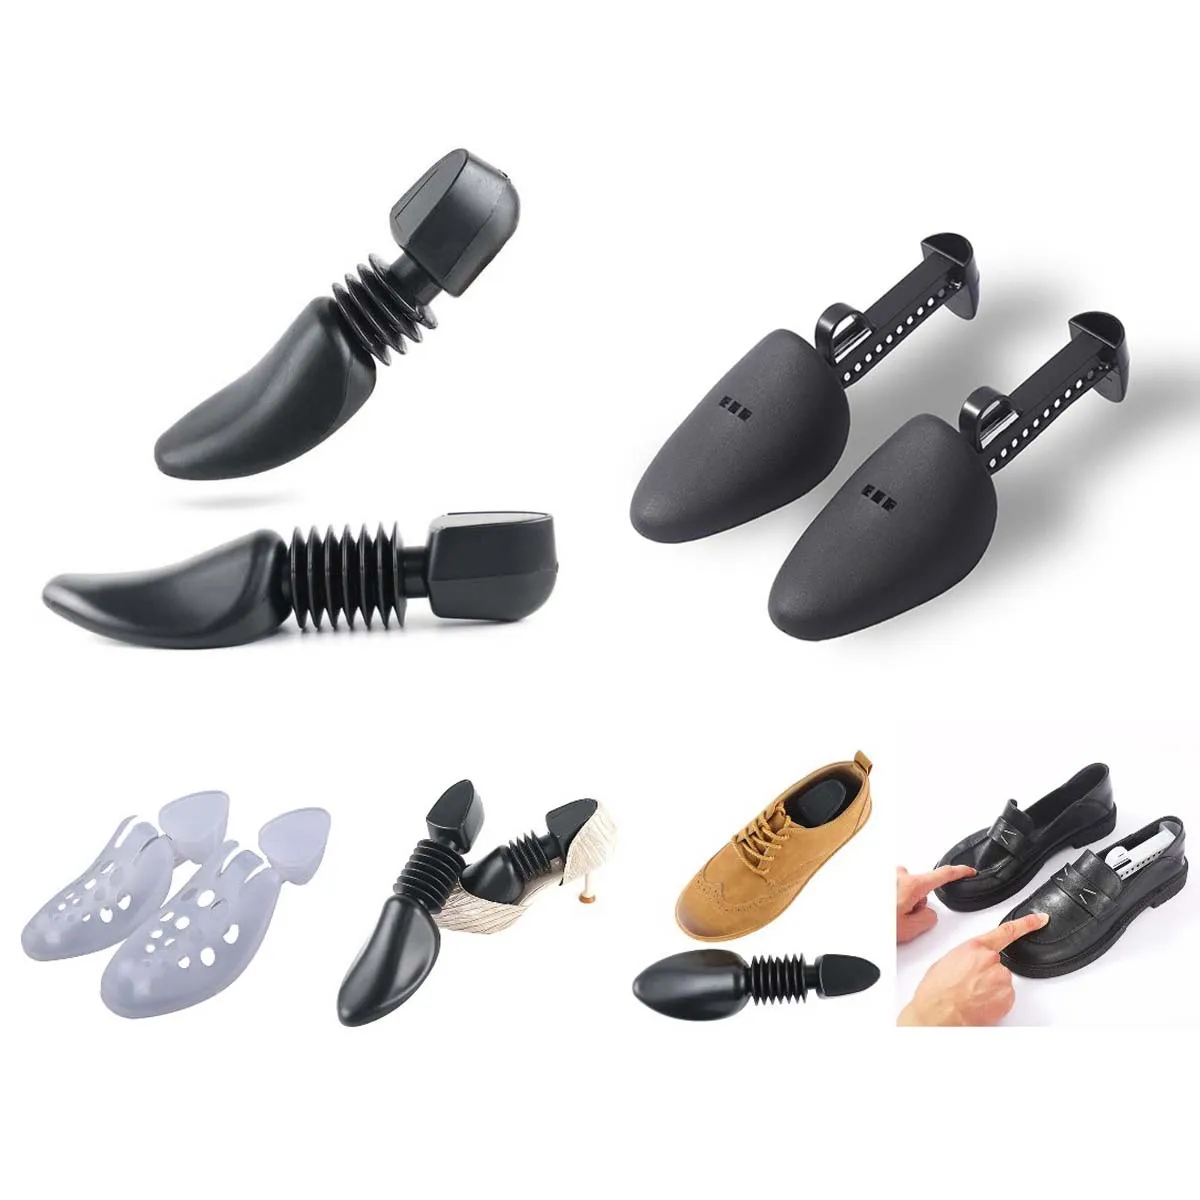 

1Pair Practical Unisex Plastic Adjustable Length Shoe Tree Shaper Shapes Stretcher For Women Men Black Shoe Racks New Fashion